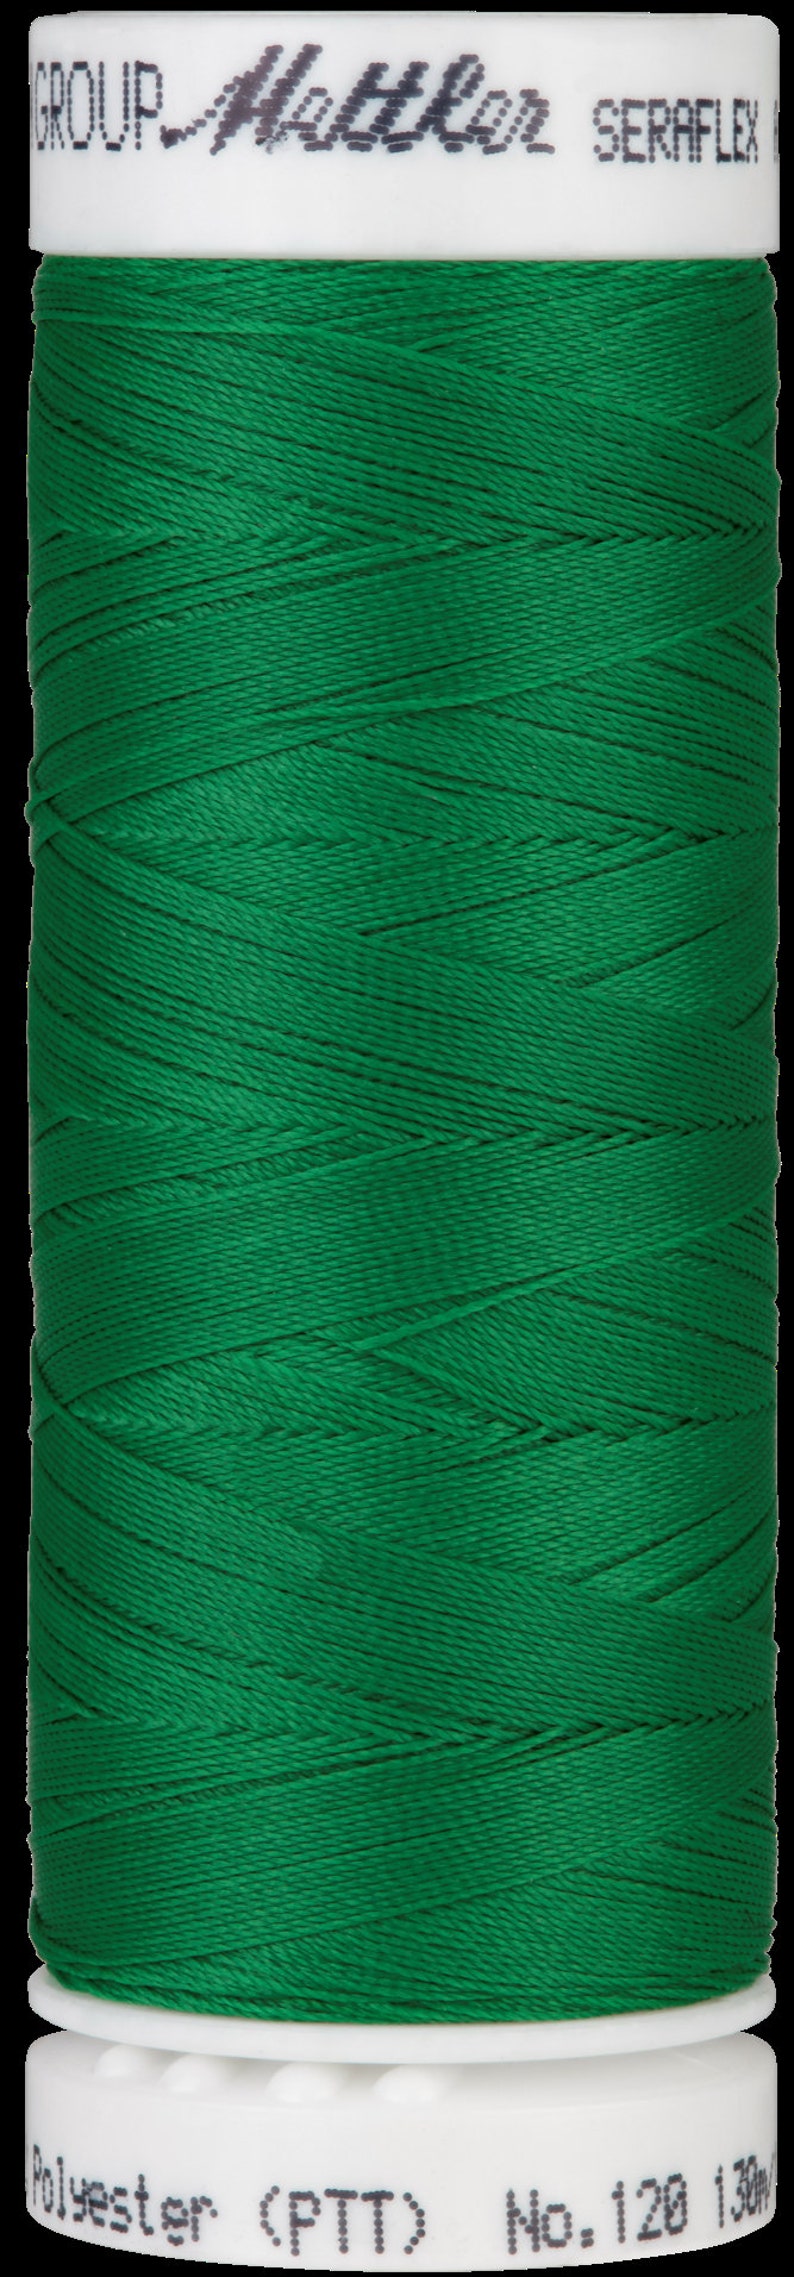 NEUE Farben Seraflex 120 flexibler Faden Nähfaden blau türkis grün braun Mettler swiss ivy